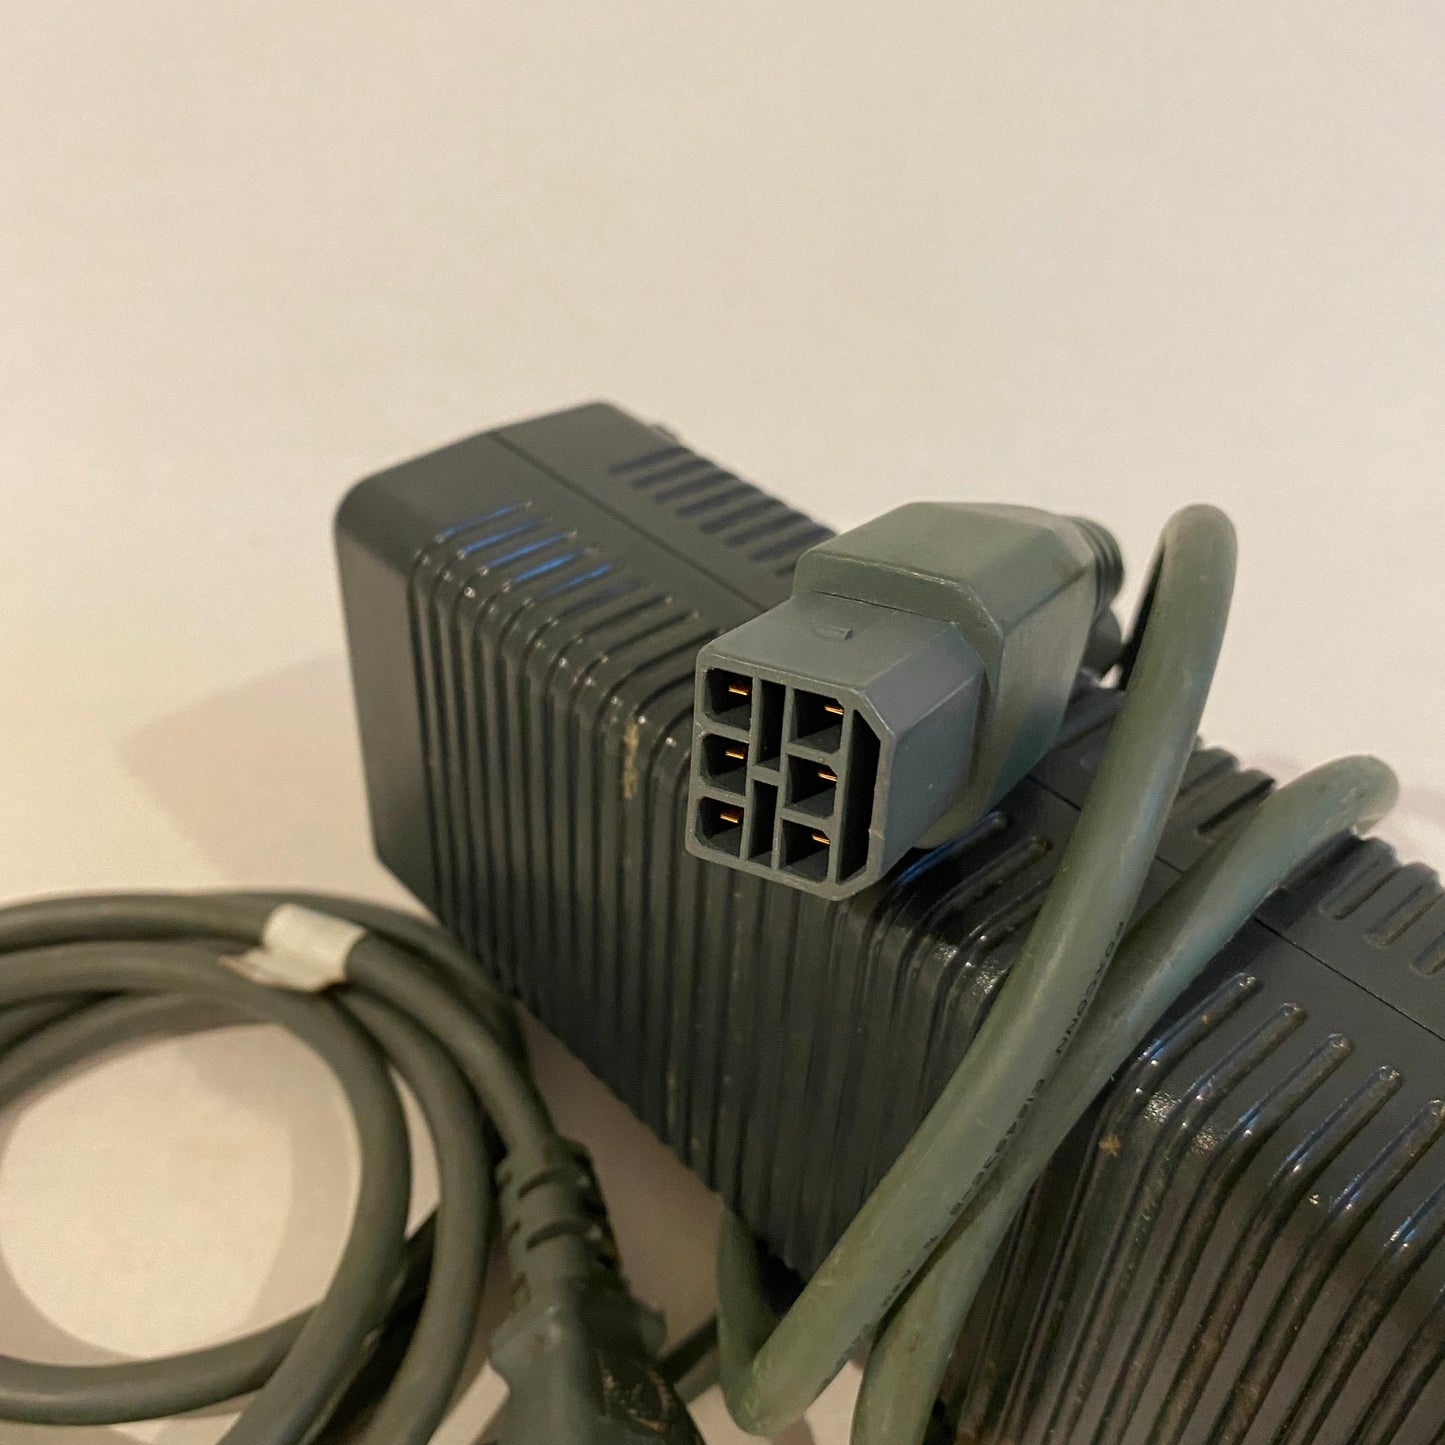 Microsoft Xbox 360 Power Supply Adapter  - PB-2171-02M1